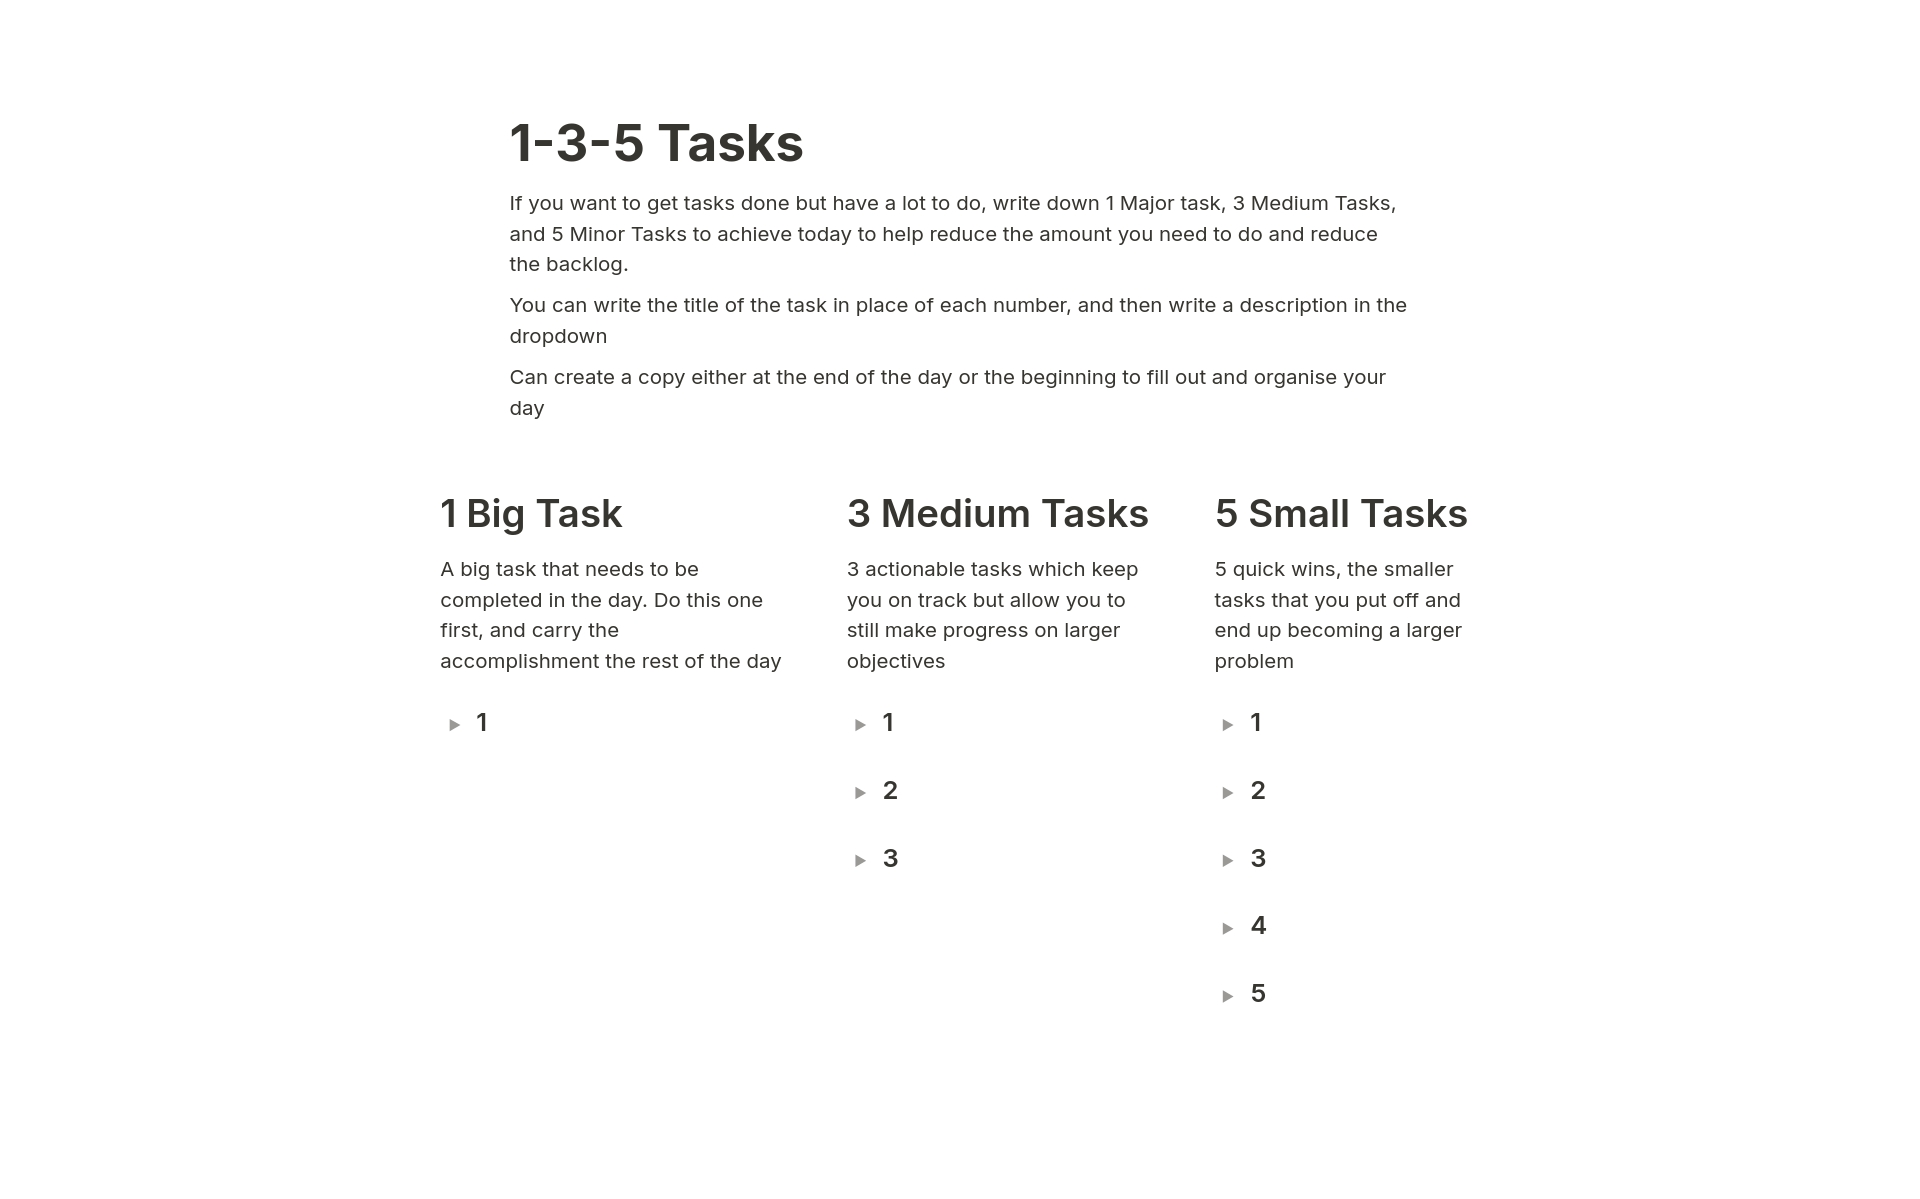 Vista previa de una plantilla para 1-3-5 Tasks